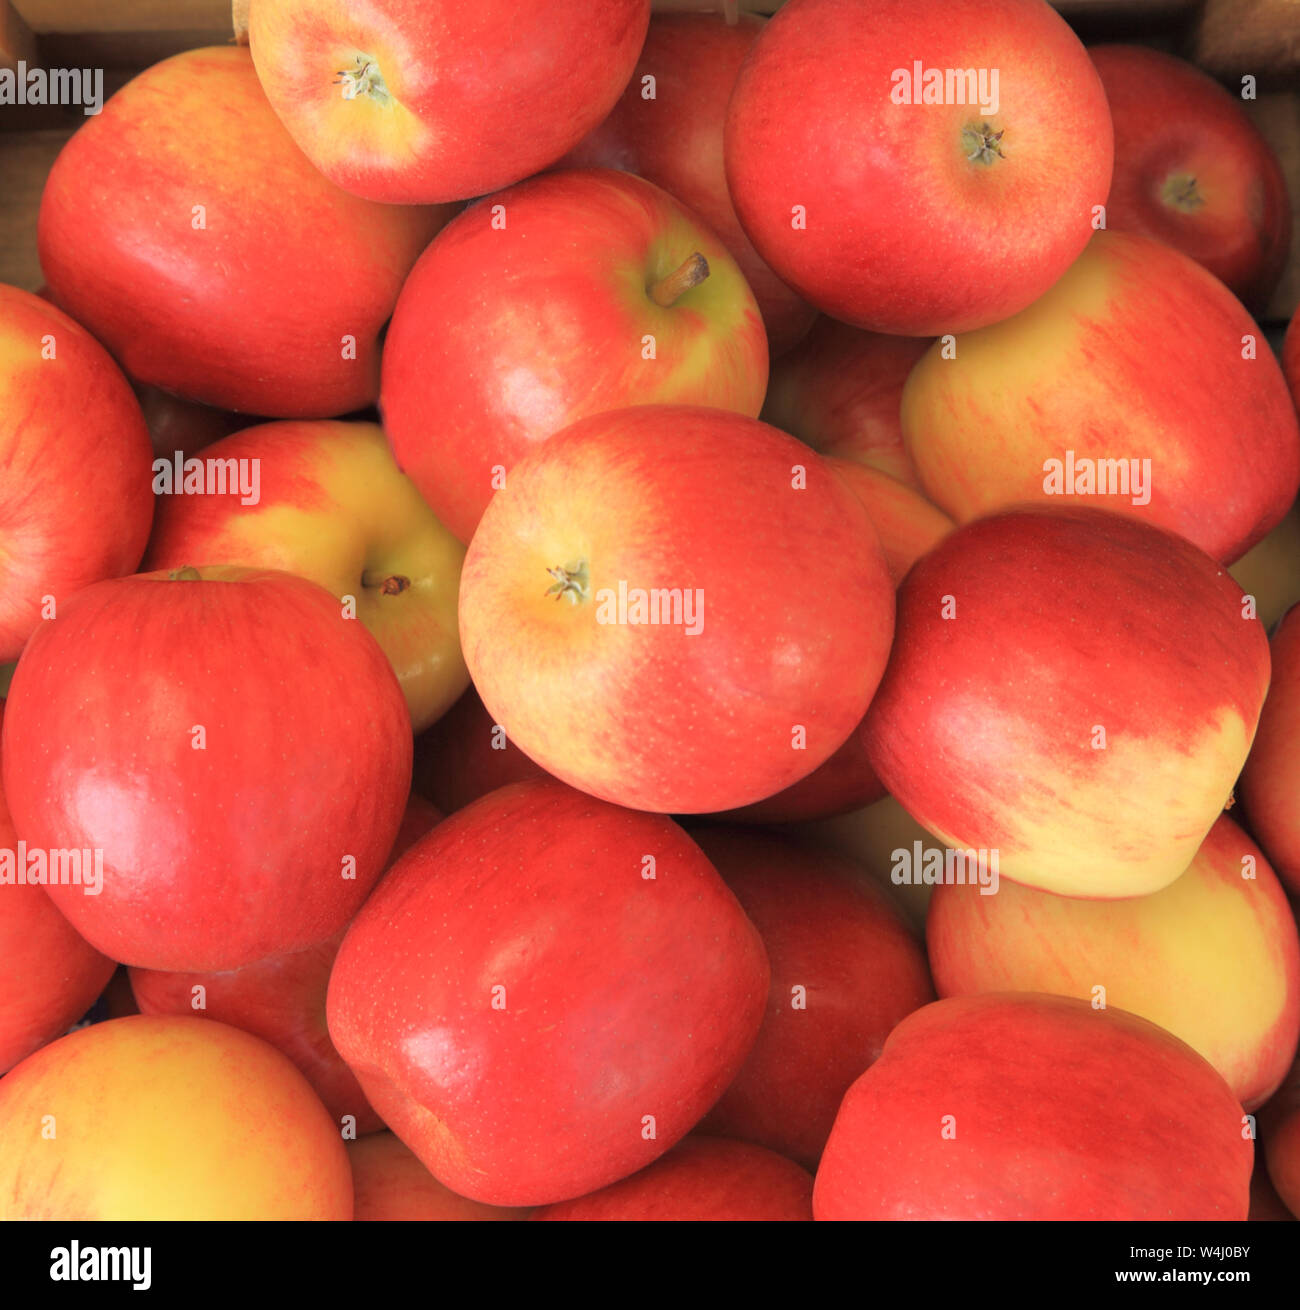 Apple "Jazz", dalla Nuova Zelanda, varietà di mele, mangiare le mele, commestibili, farm shop display Foto Stock